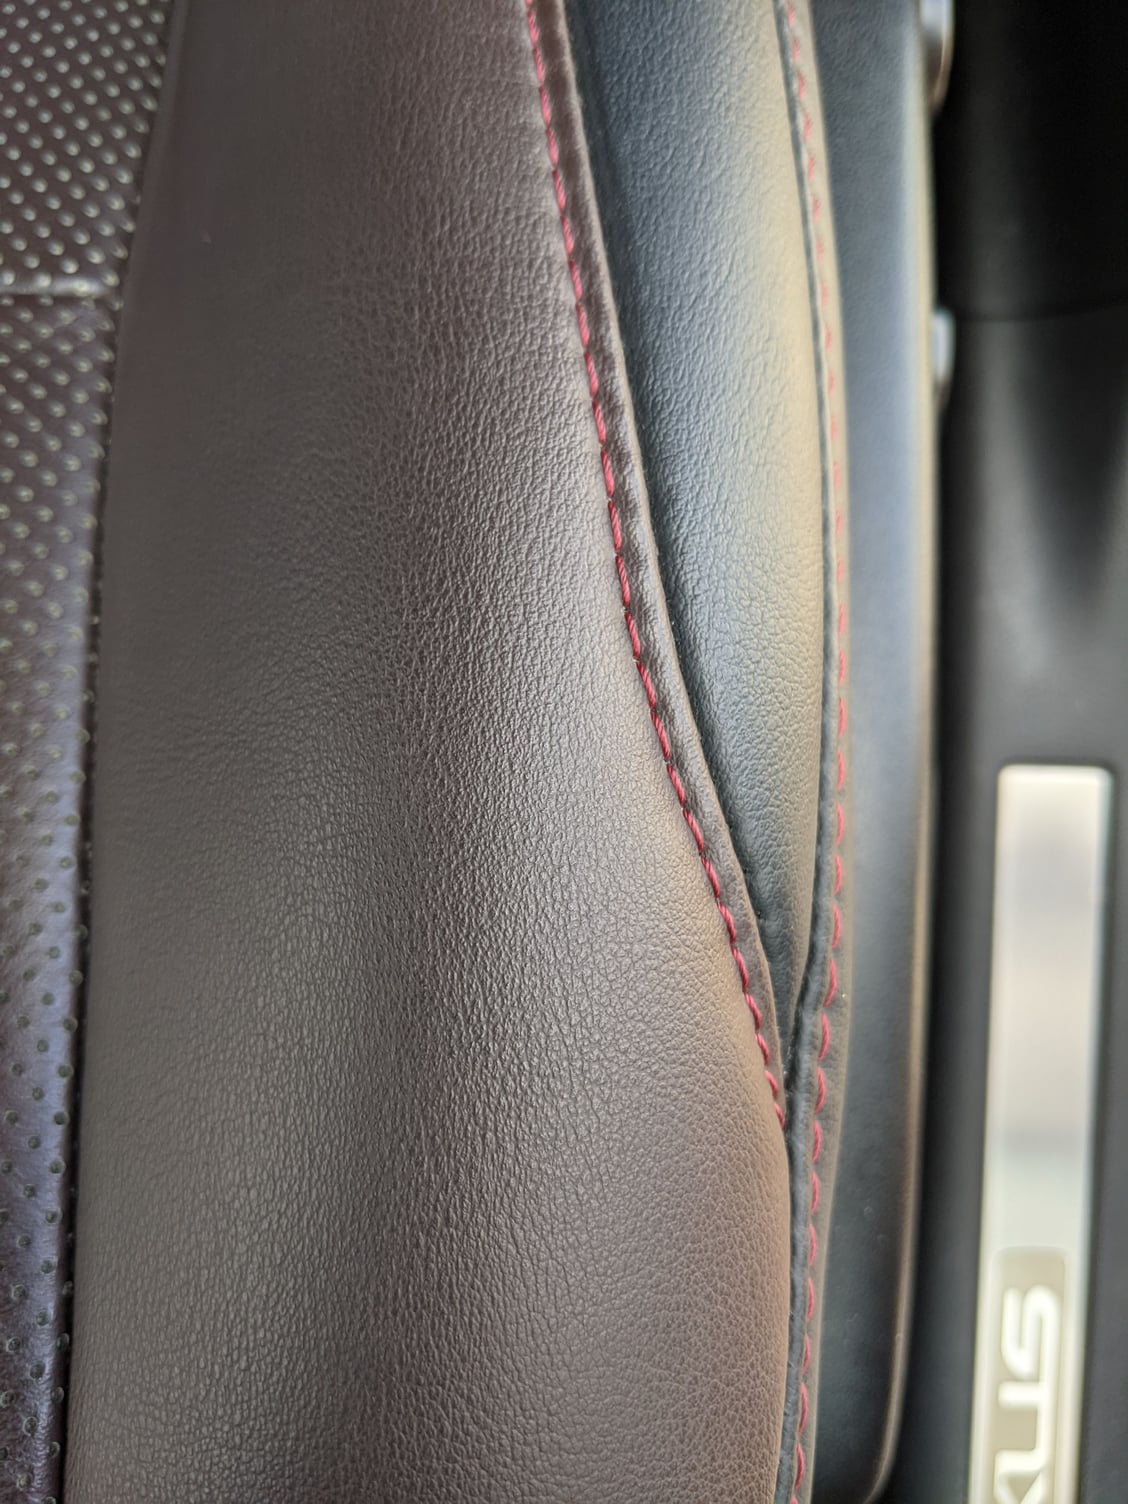 Louis Vuitton Leather Interior - ClubLexus - Lexus Forum Discussion